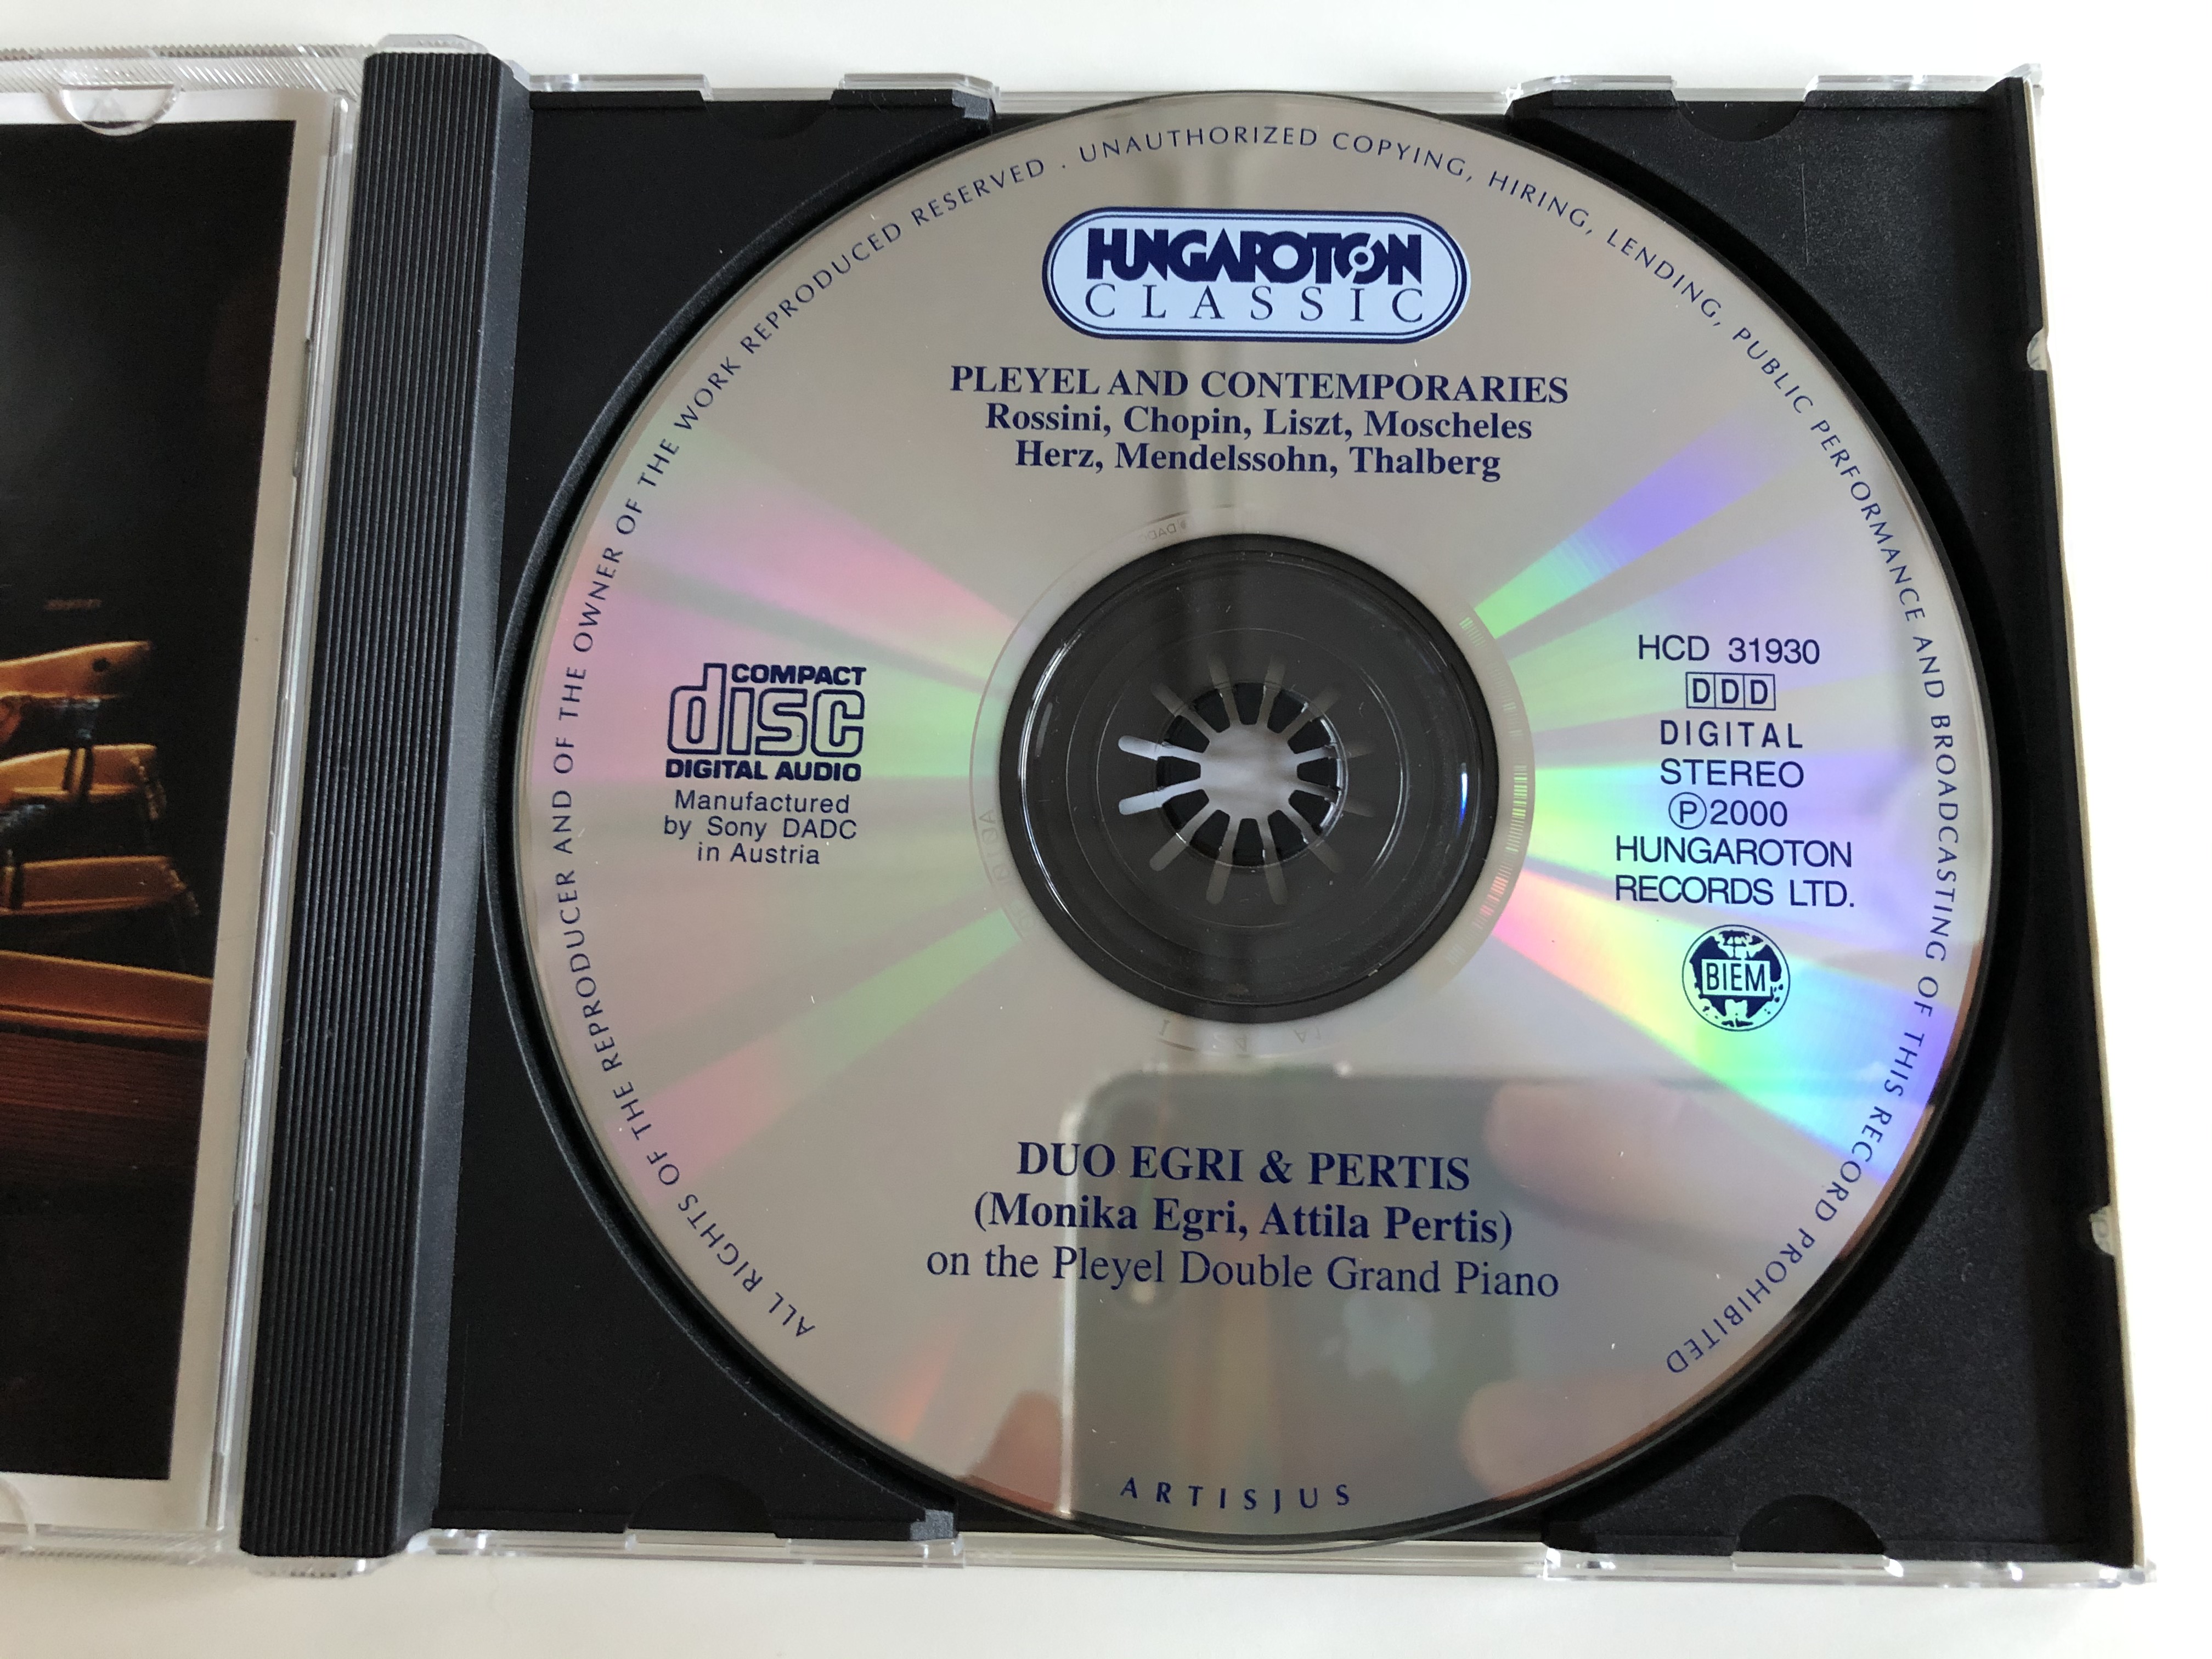 pleyel-contemporaries-rossini-chopin-liszt-moscheles-herz-medelssohn-thalberg-duo-egri-pertis-on-the-pleyel-double-grand-piano-hungaroton-classic-audio-cd-2000-stereo-hcd-31930-8-.jpg